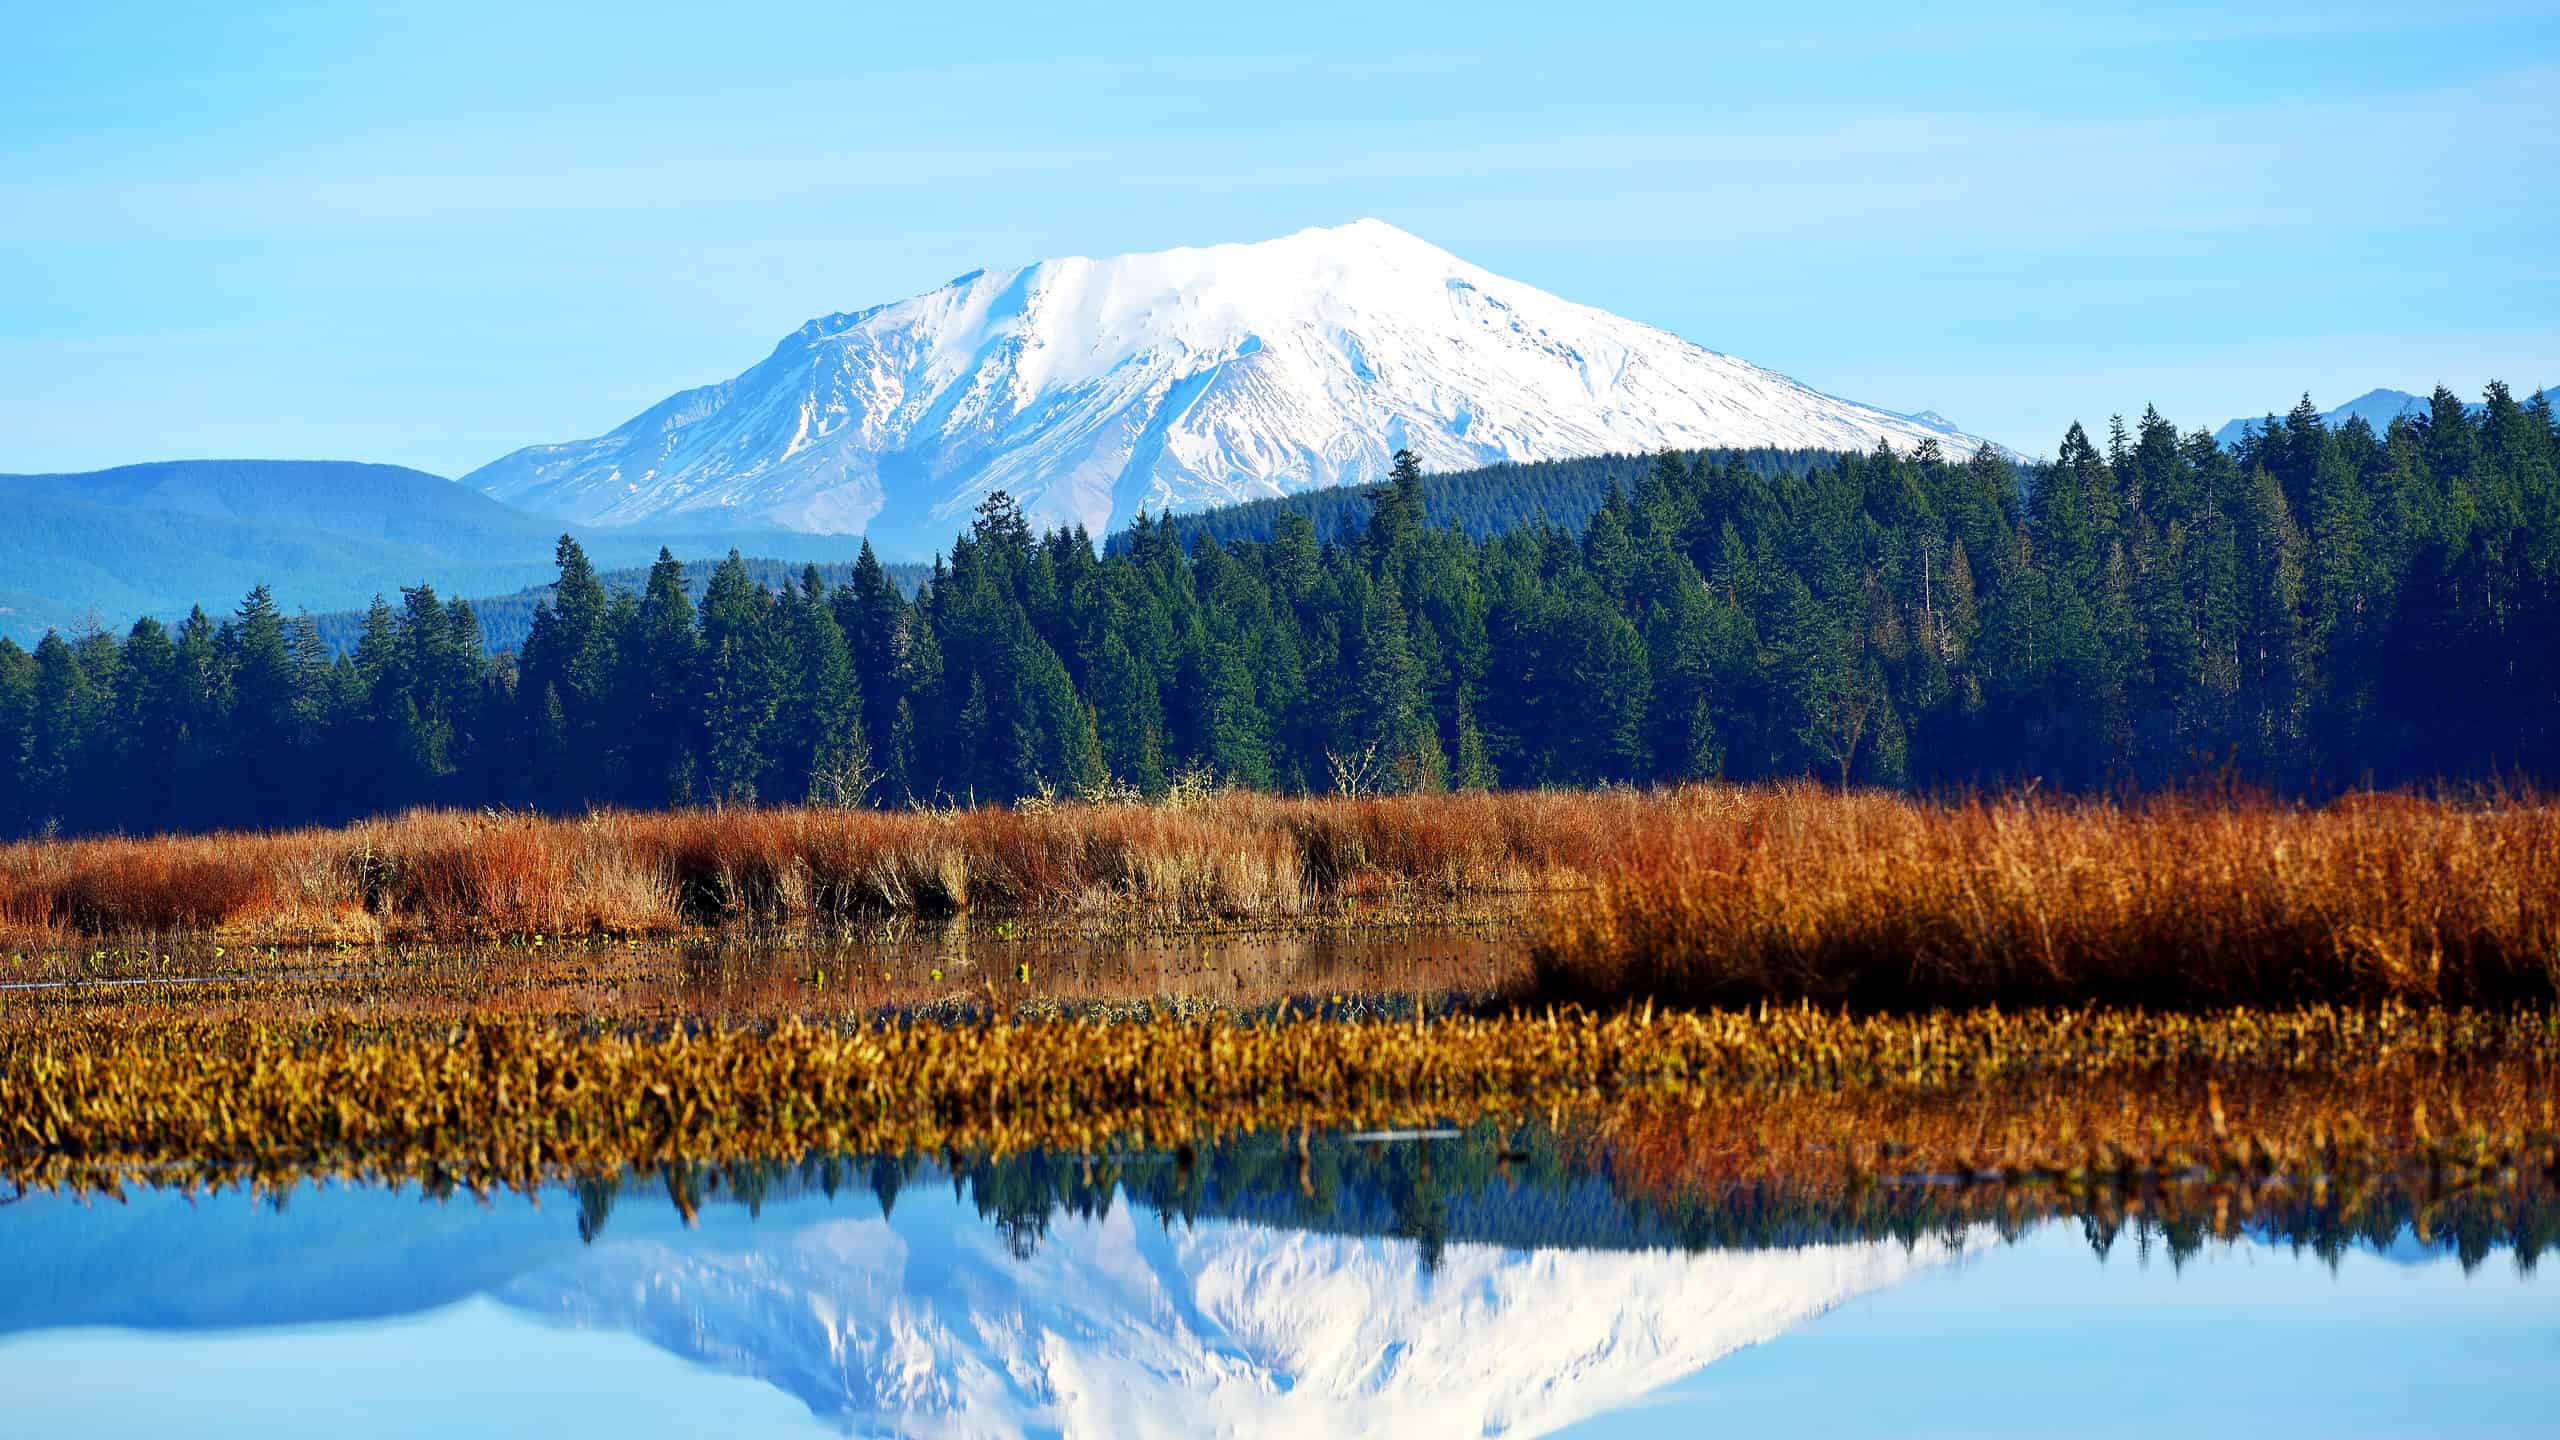 Mount Saint Helens Reflected in Silver Lake in Washington